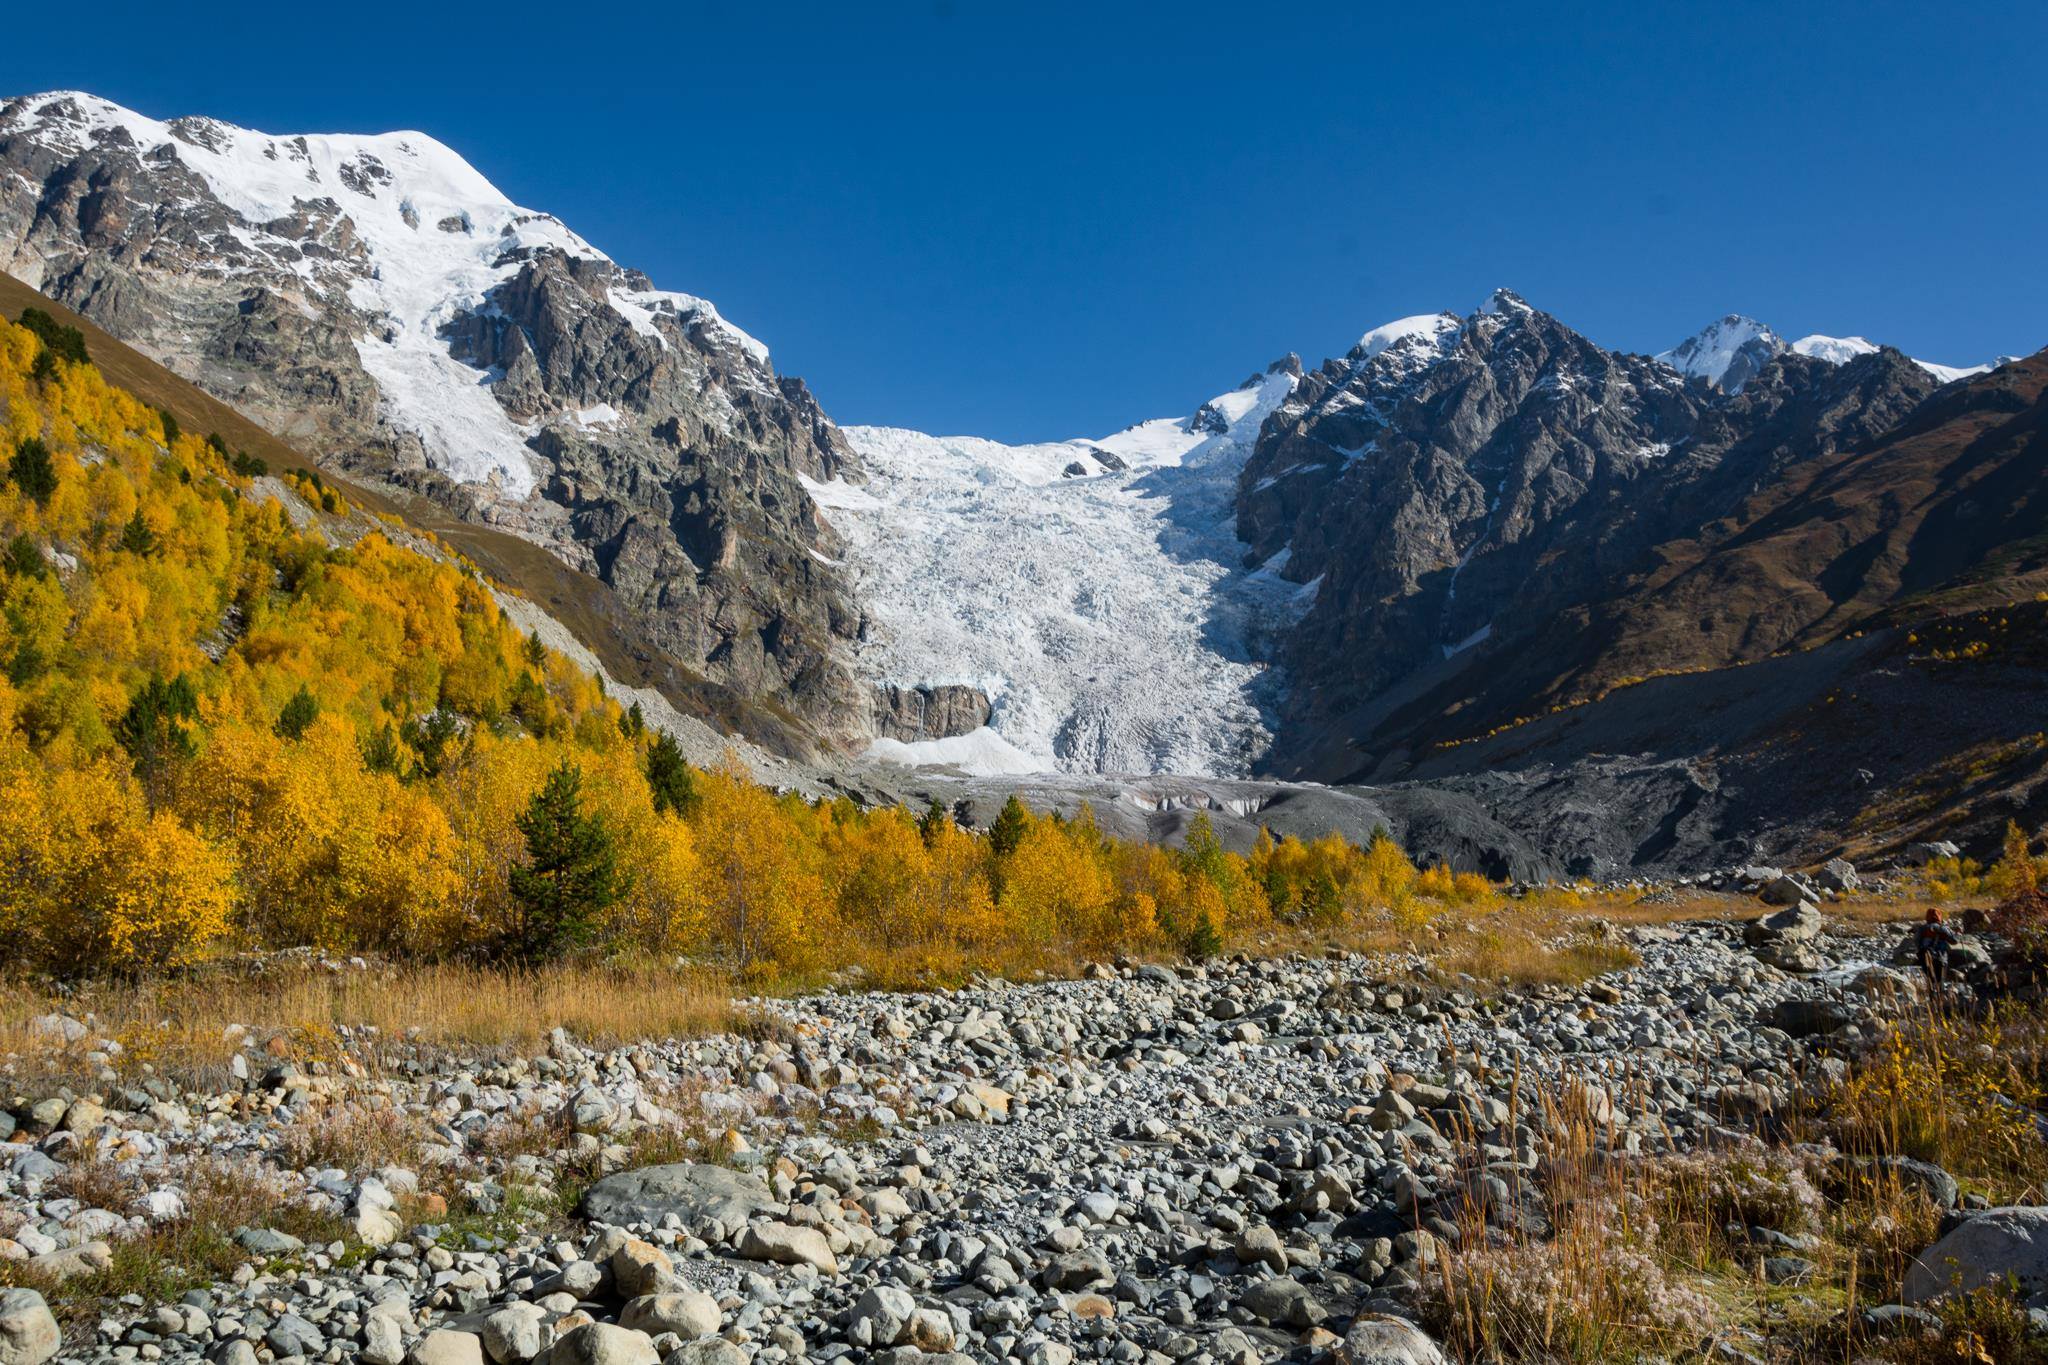 Adishi glacier in the early October